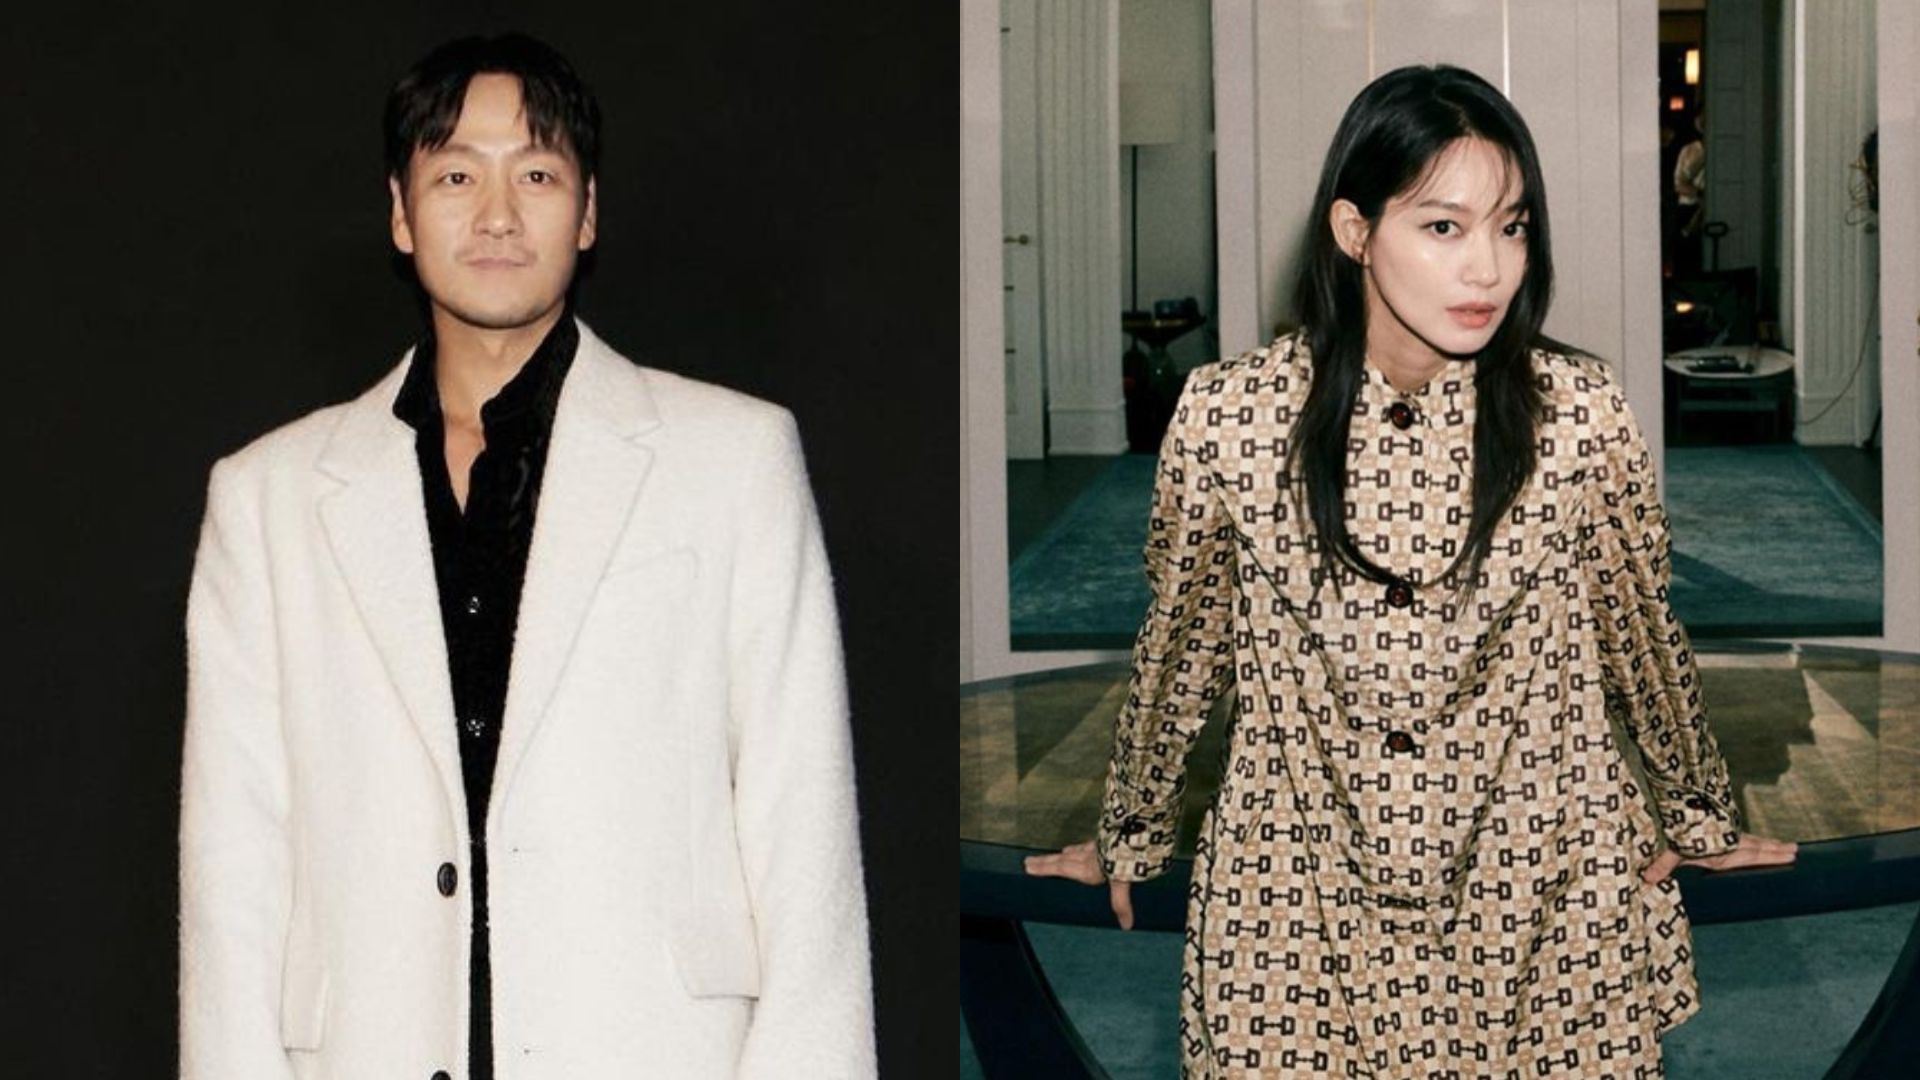 Membintangi Drama Korea Thriller Kriminal Terbaru, Shin Min Ah dan Park Hae Soo Jalani Duet Maut